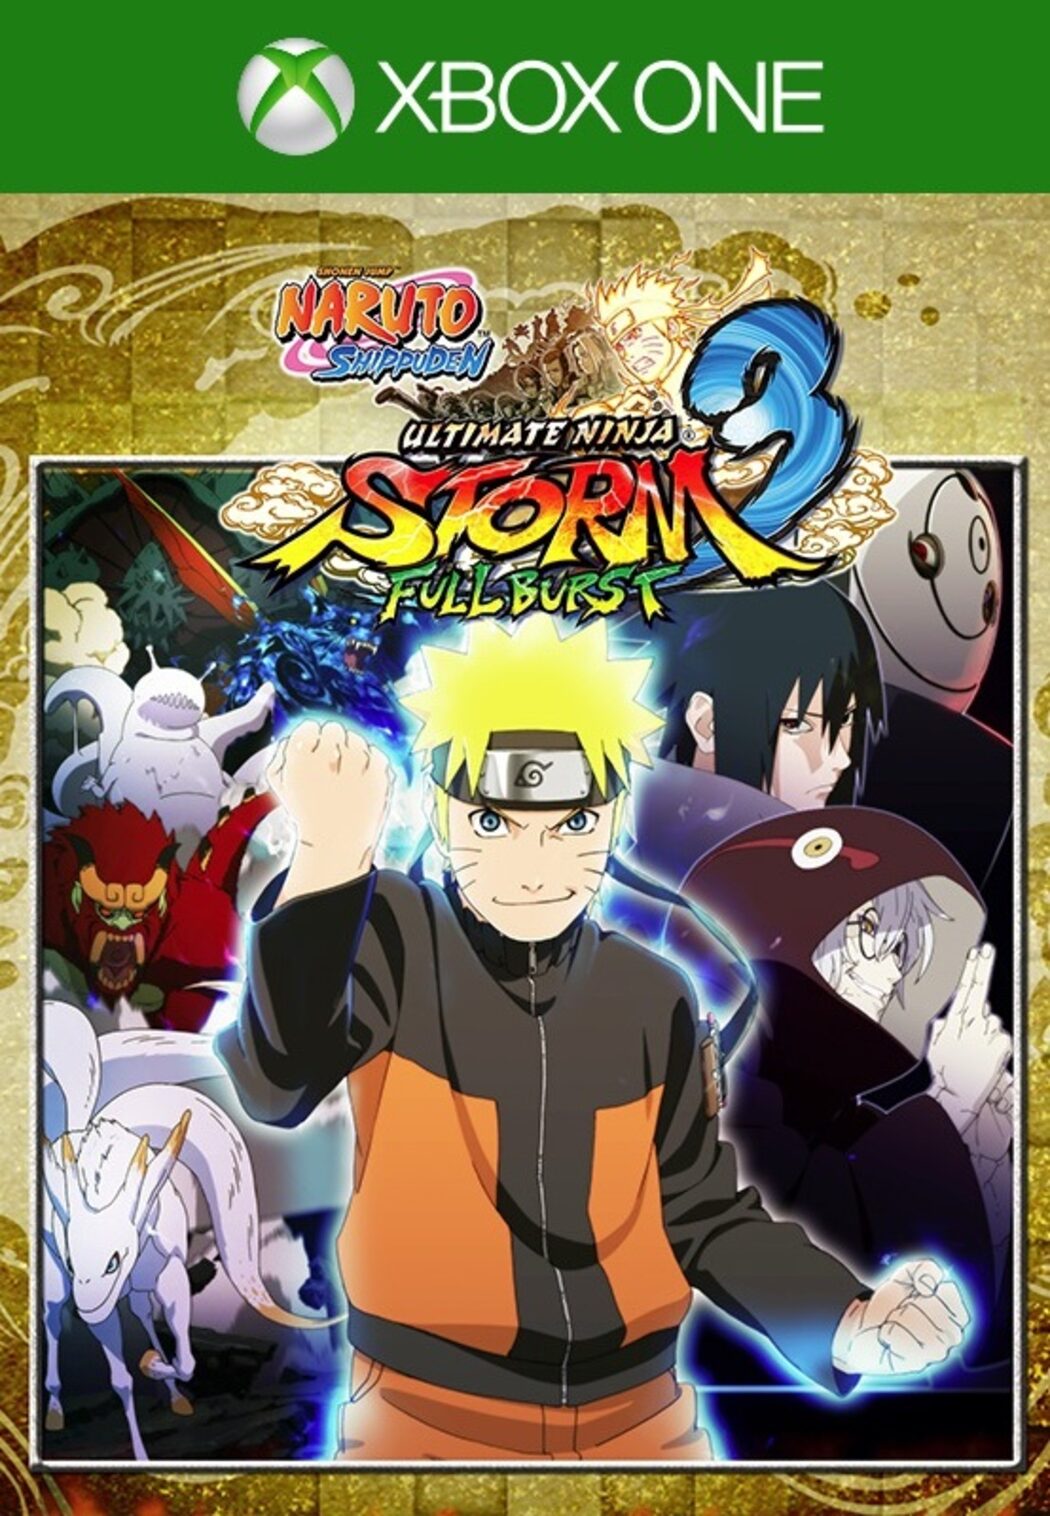 Xbox 360 - Naruto Shippuden: Ultimate Ninja Storm 3 - waz